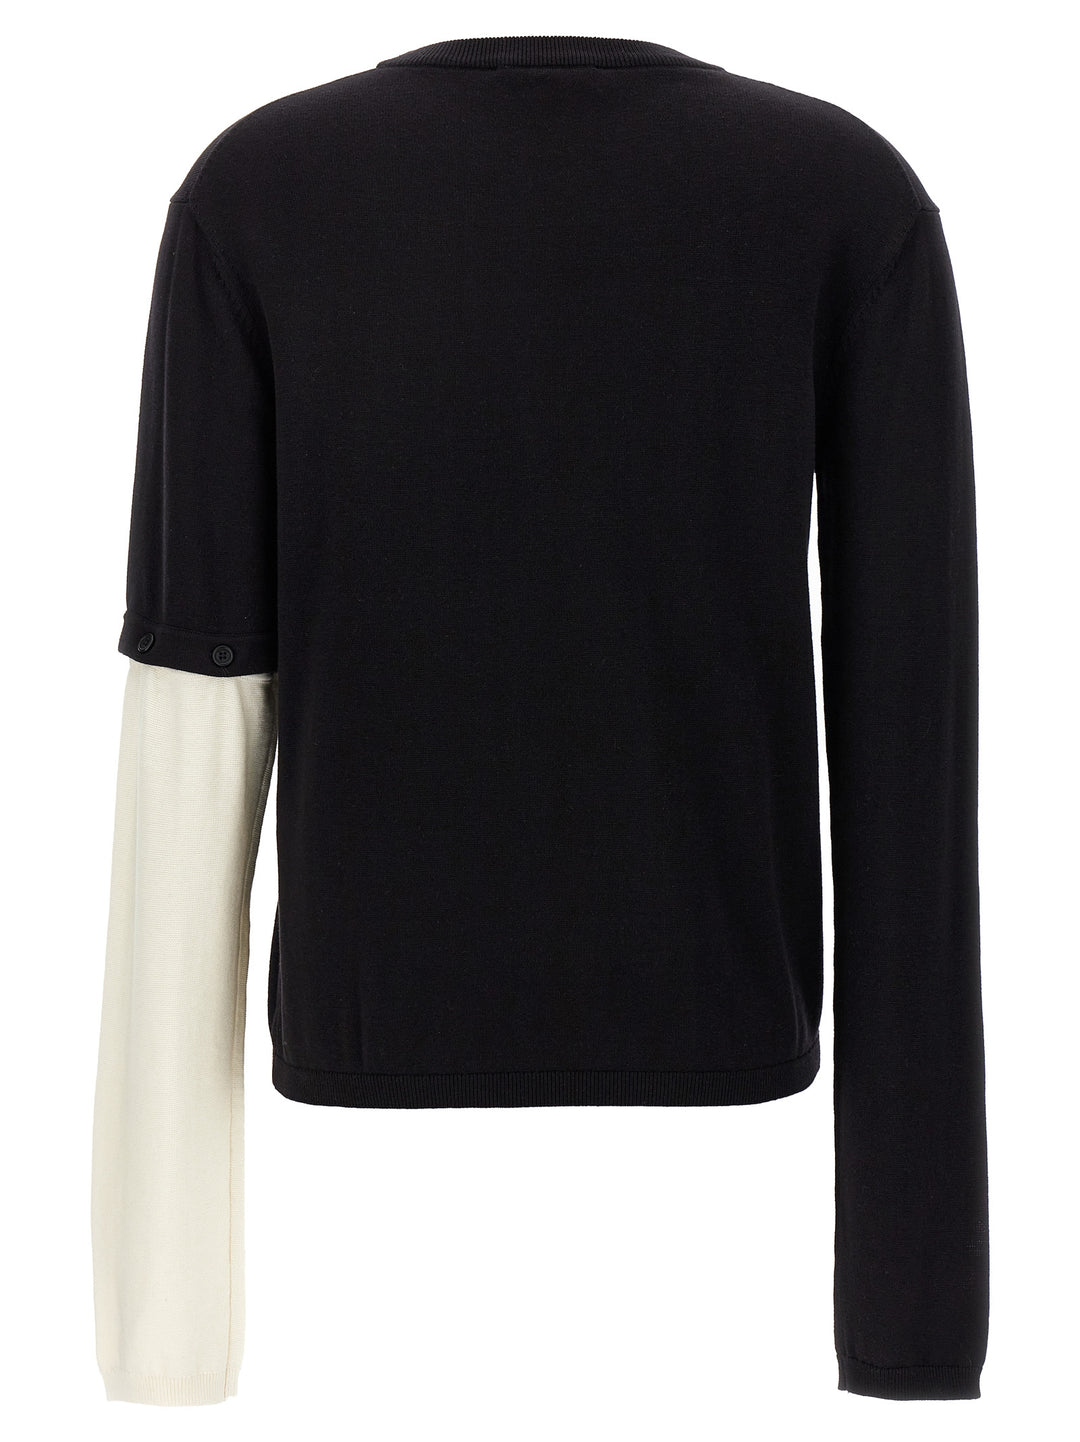 Removable Sleeve Sweater Maglioni Bianco/Nero